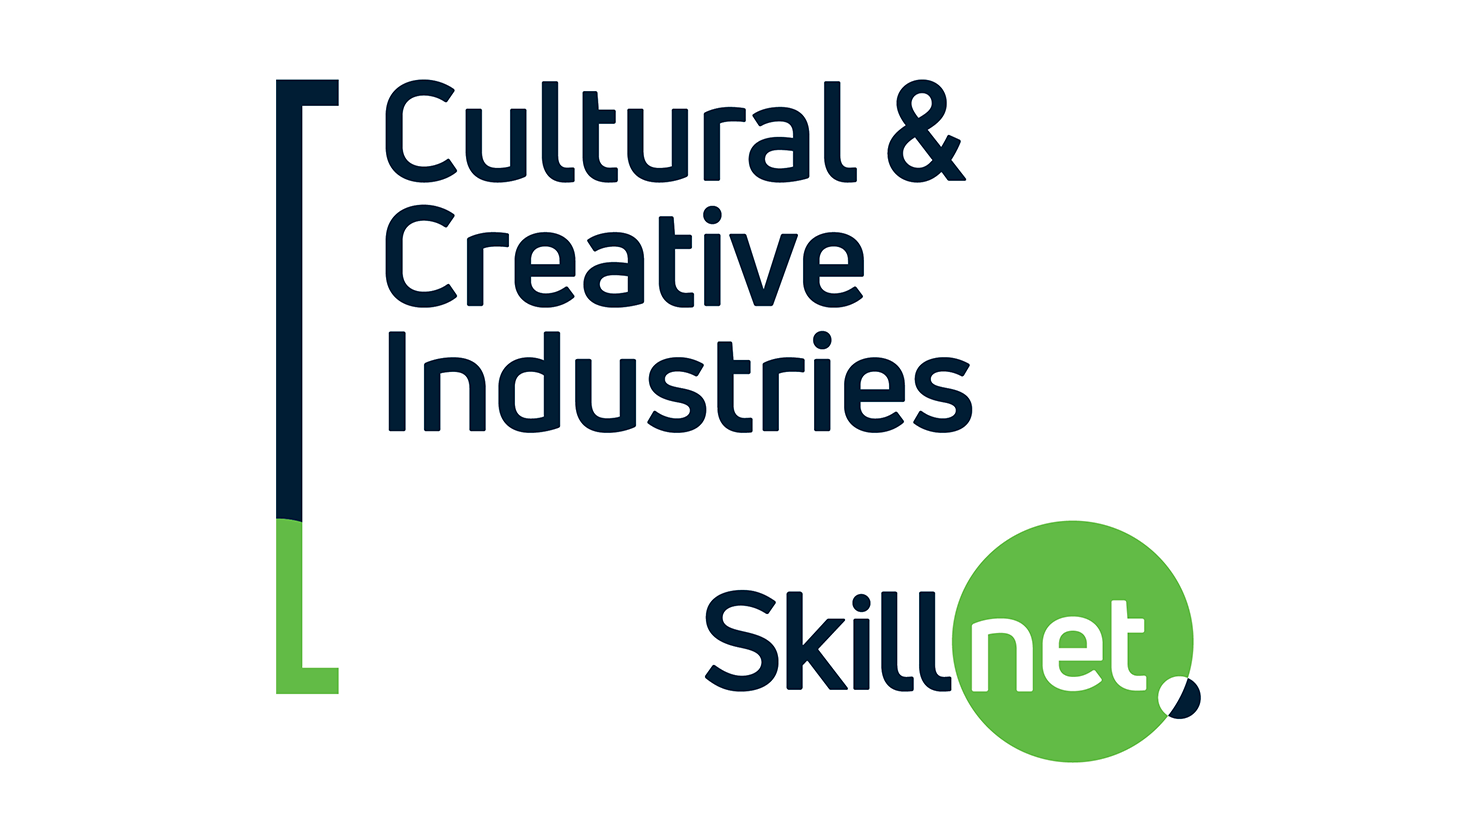 Cultural & Creative Industries Skillnet